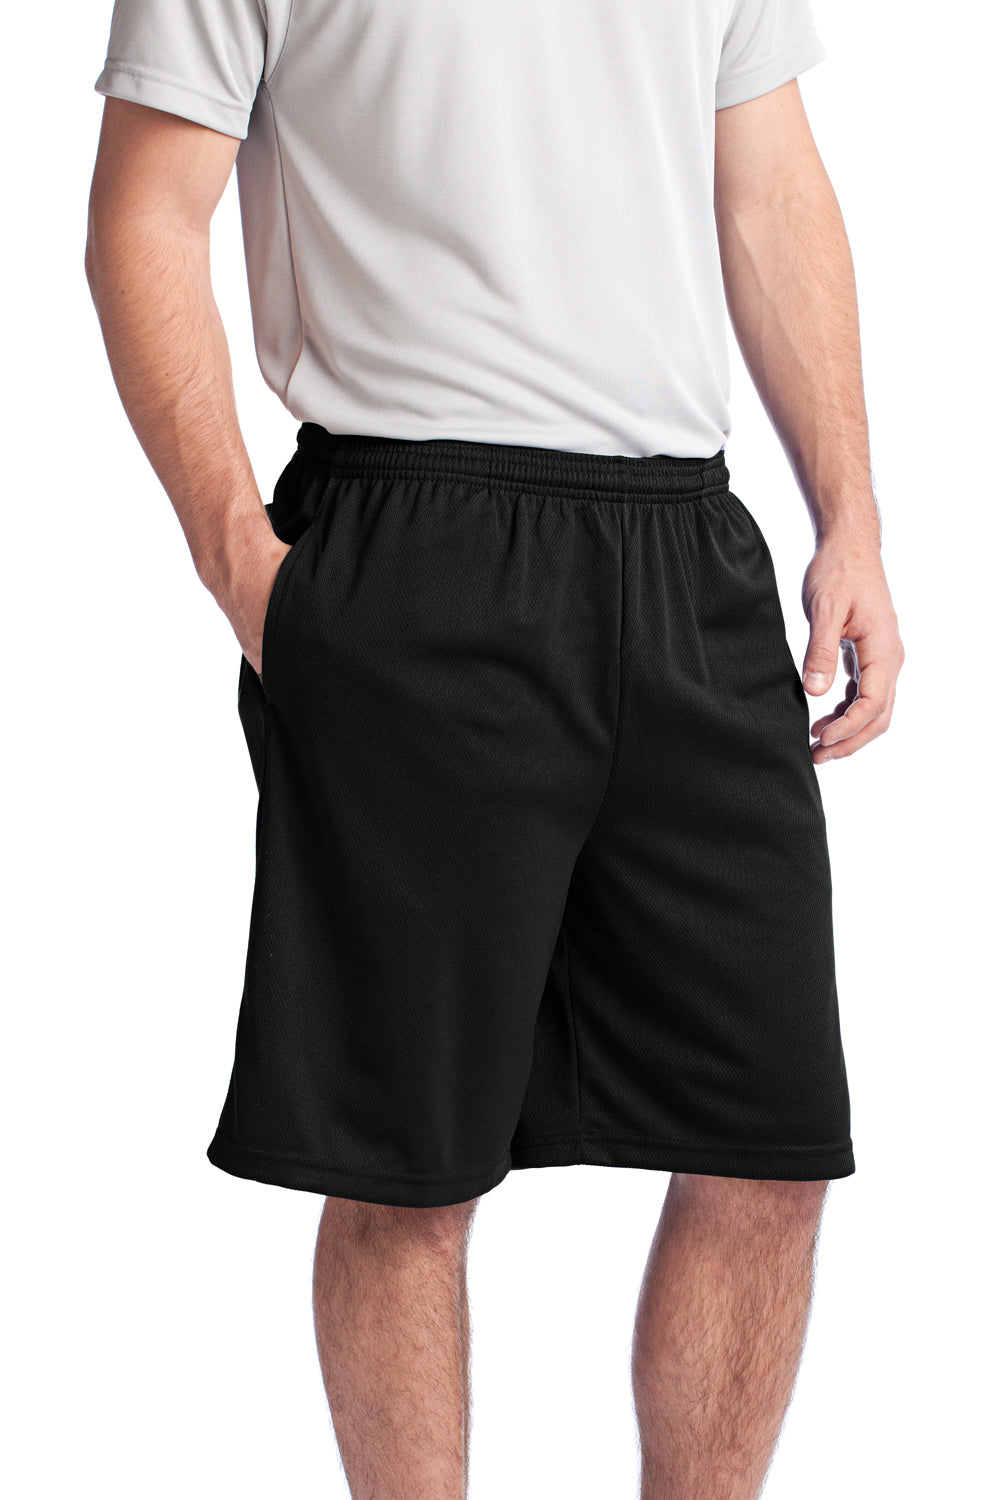 Sport-Tek ST312 PosiCharge Tough Mesh Shorts w/ Pockets Black 3Q